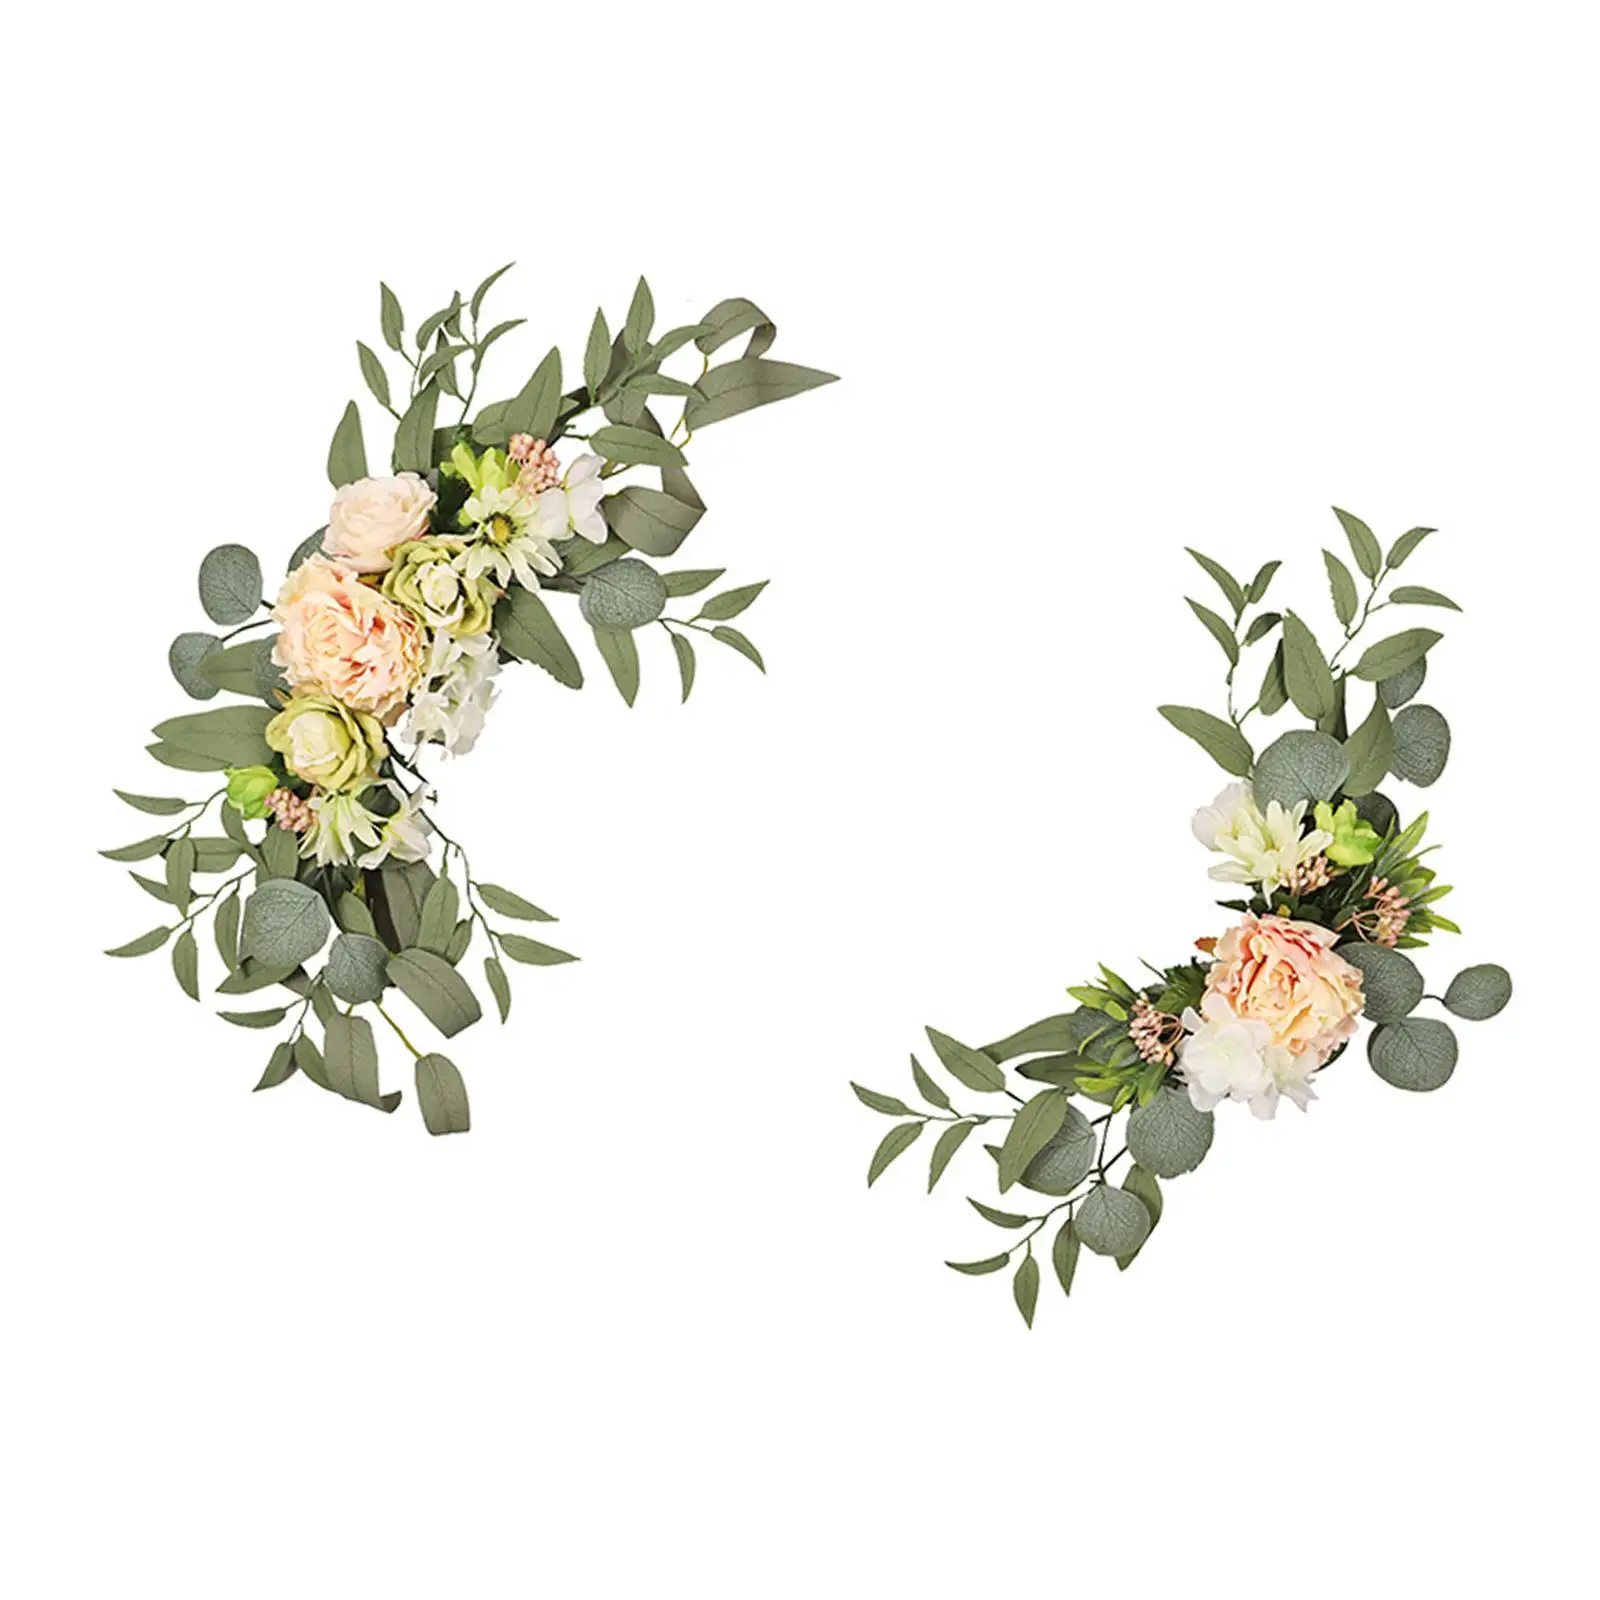 2x Wedding Arch Flowers Handmade Artificial Flower Swag for Arch DIY Burgundy Rose Arrangements Reception Backdrop Home Ceremony